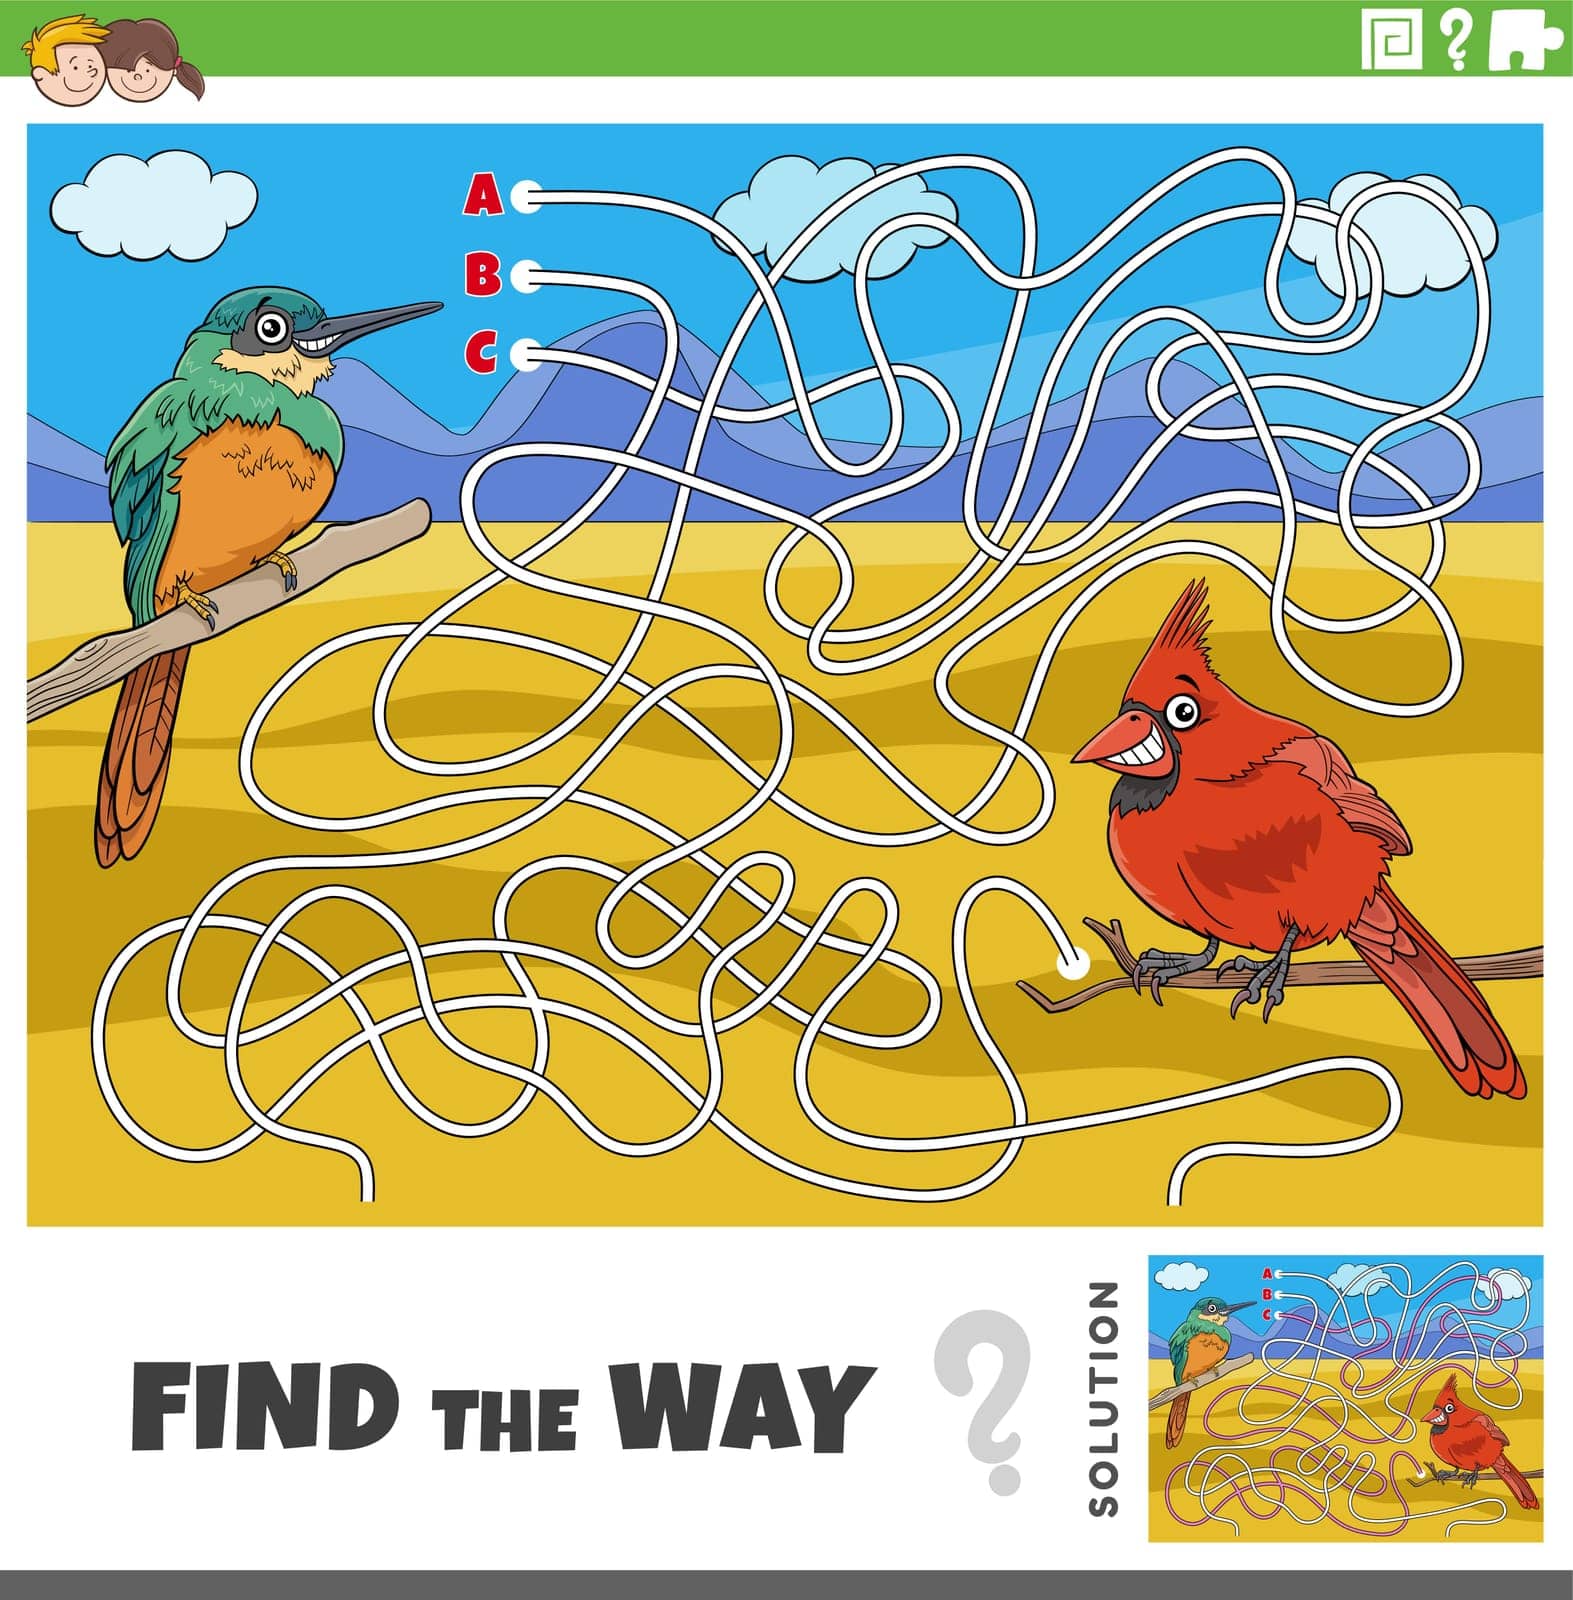 find the way maze game with cartoon birds characters by izakowski